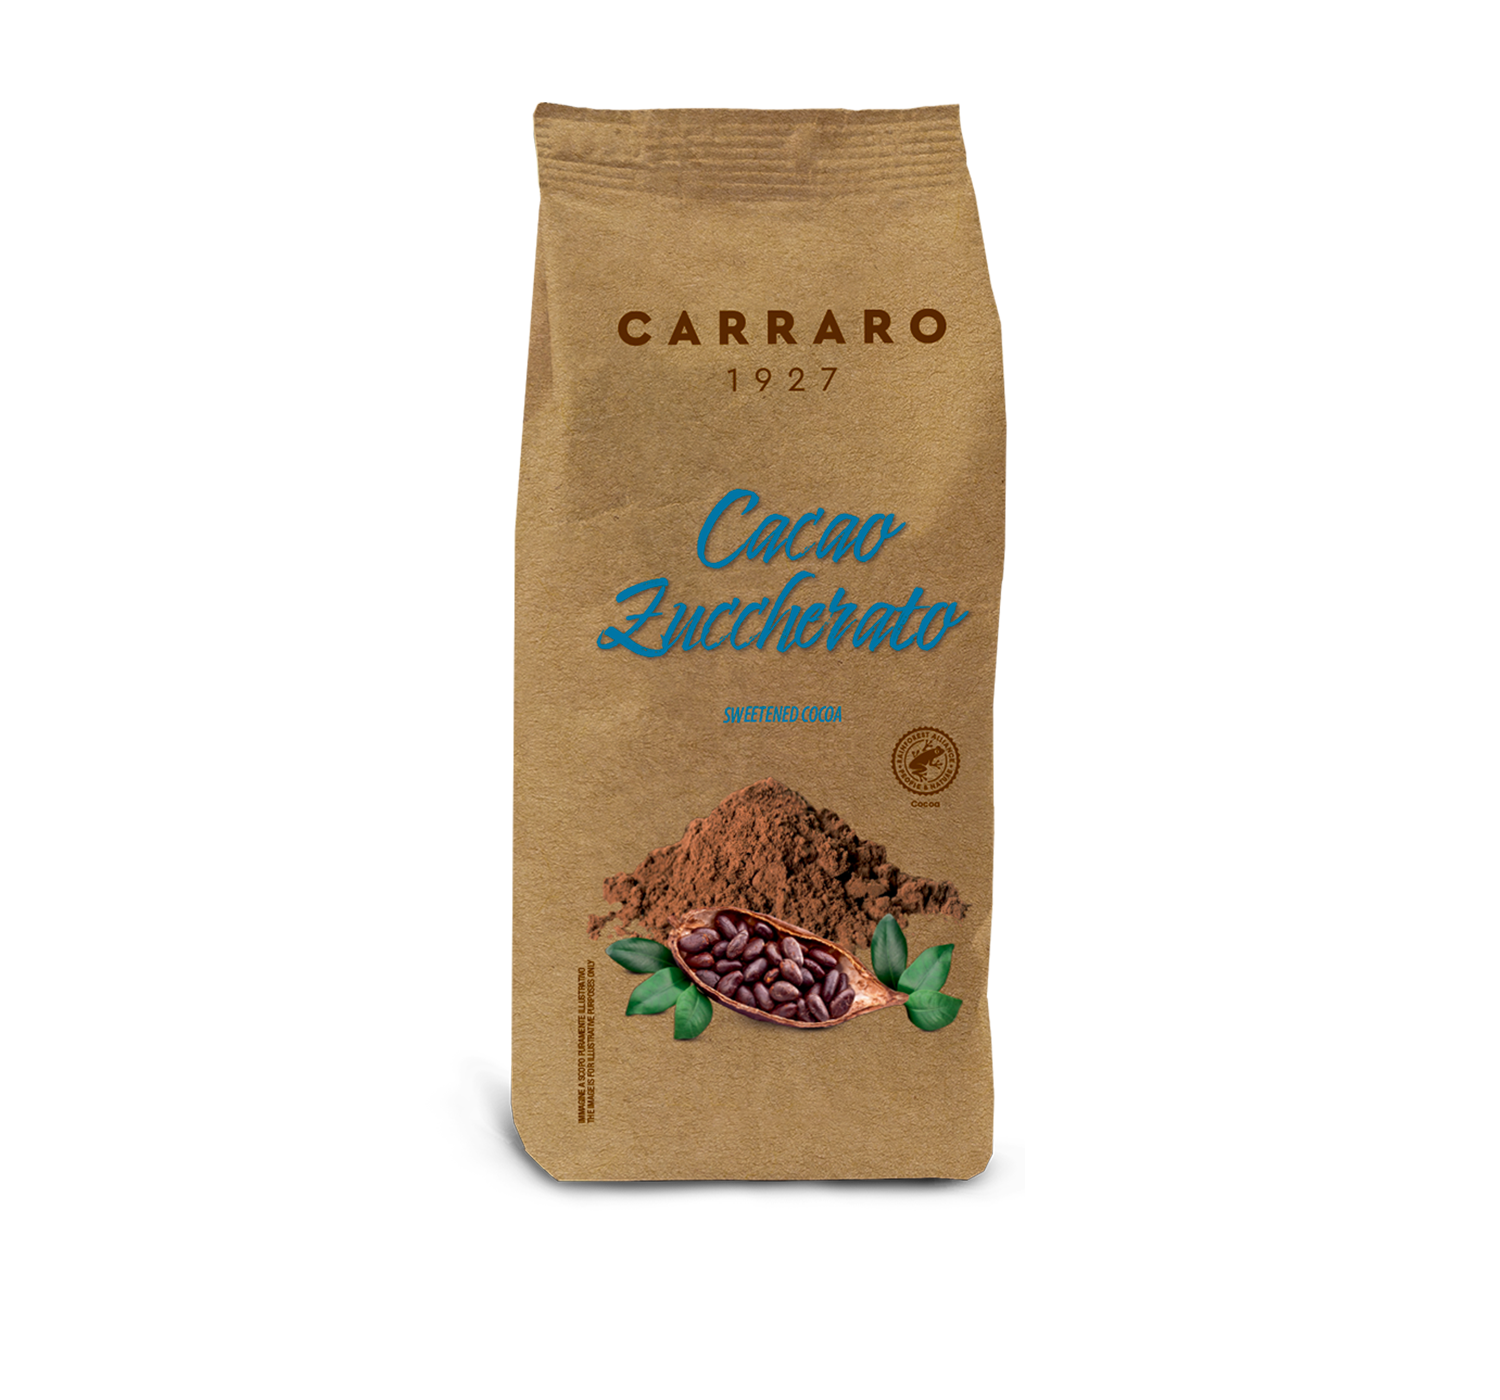 Cacao - Cacao zuccherato – 500 g - Shop online Caffè Carraro